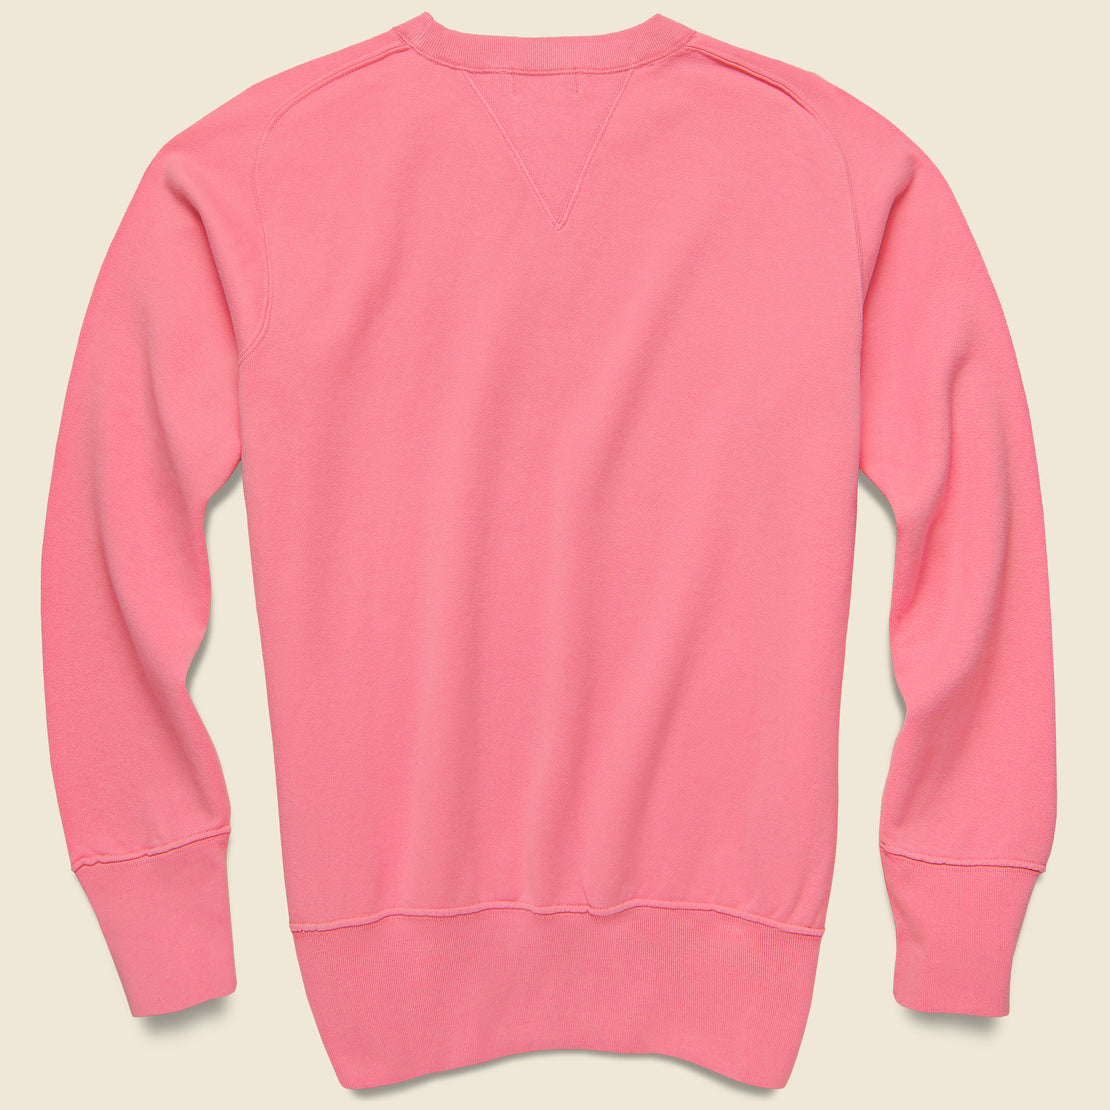 Bay Meadows Sweatshirt - Desert Rose - Levis Vintage Clothing - STAG Provisions - Tops - Fleece / Sweatshirt